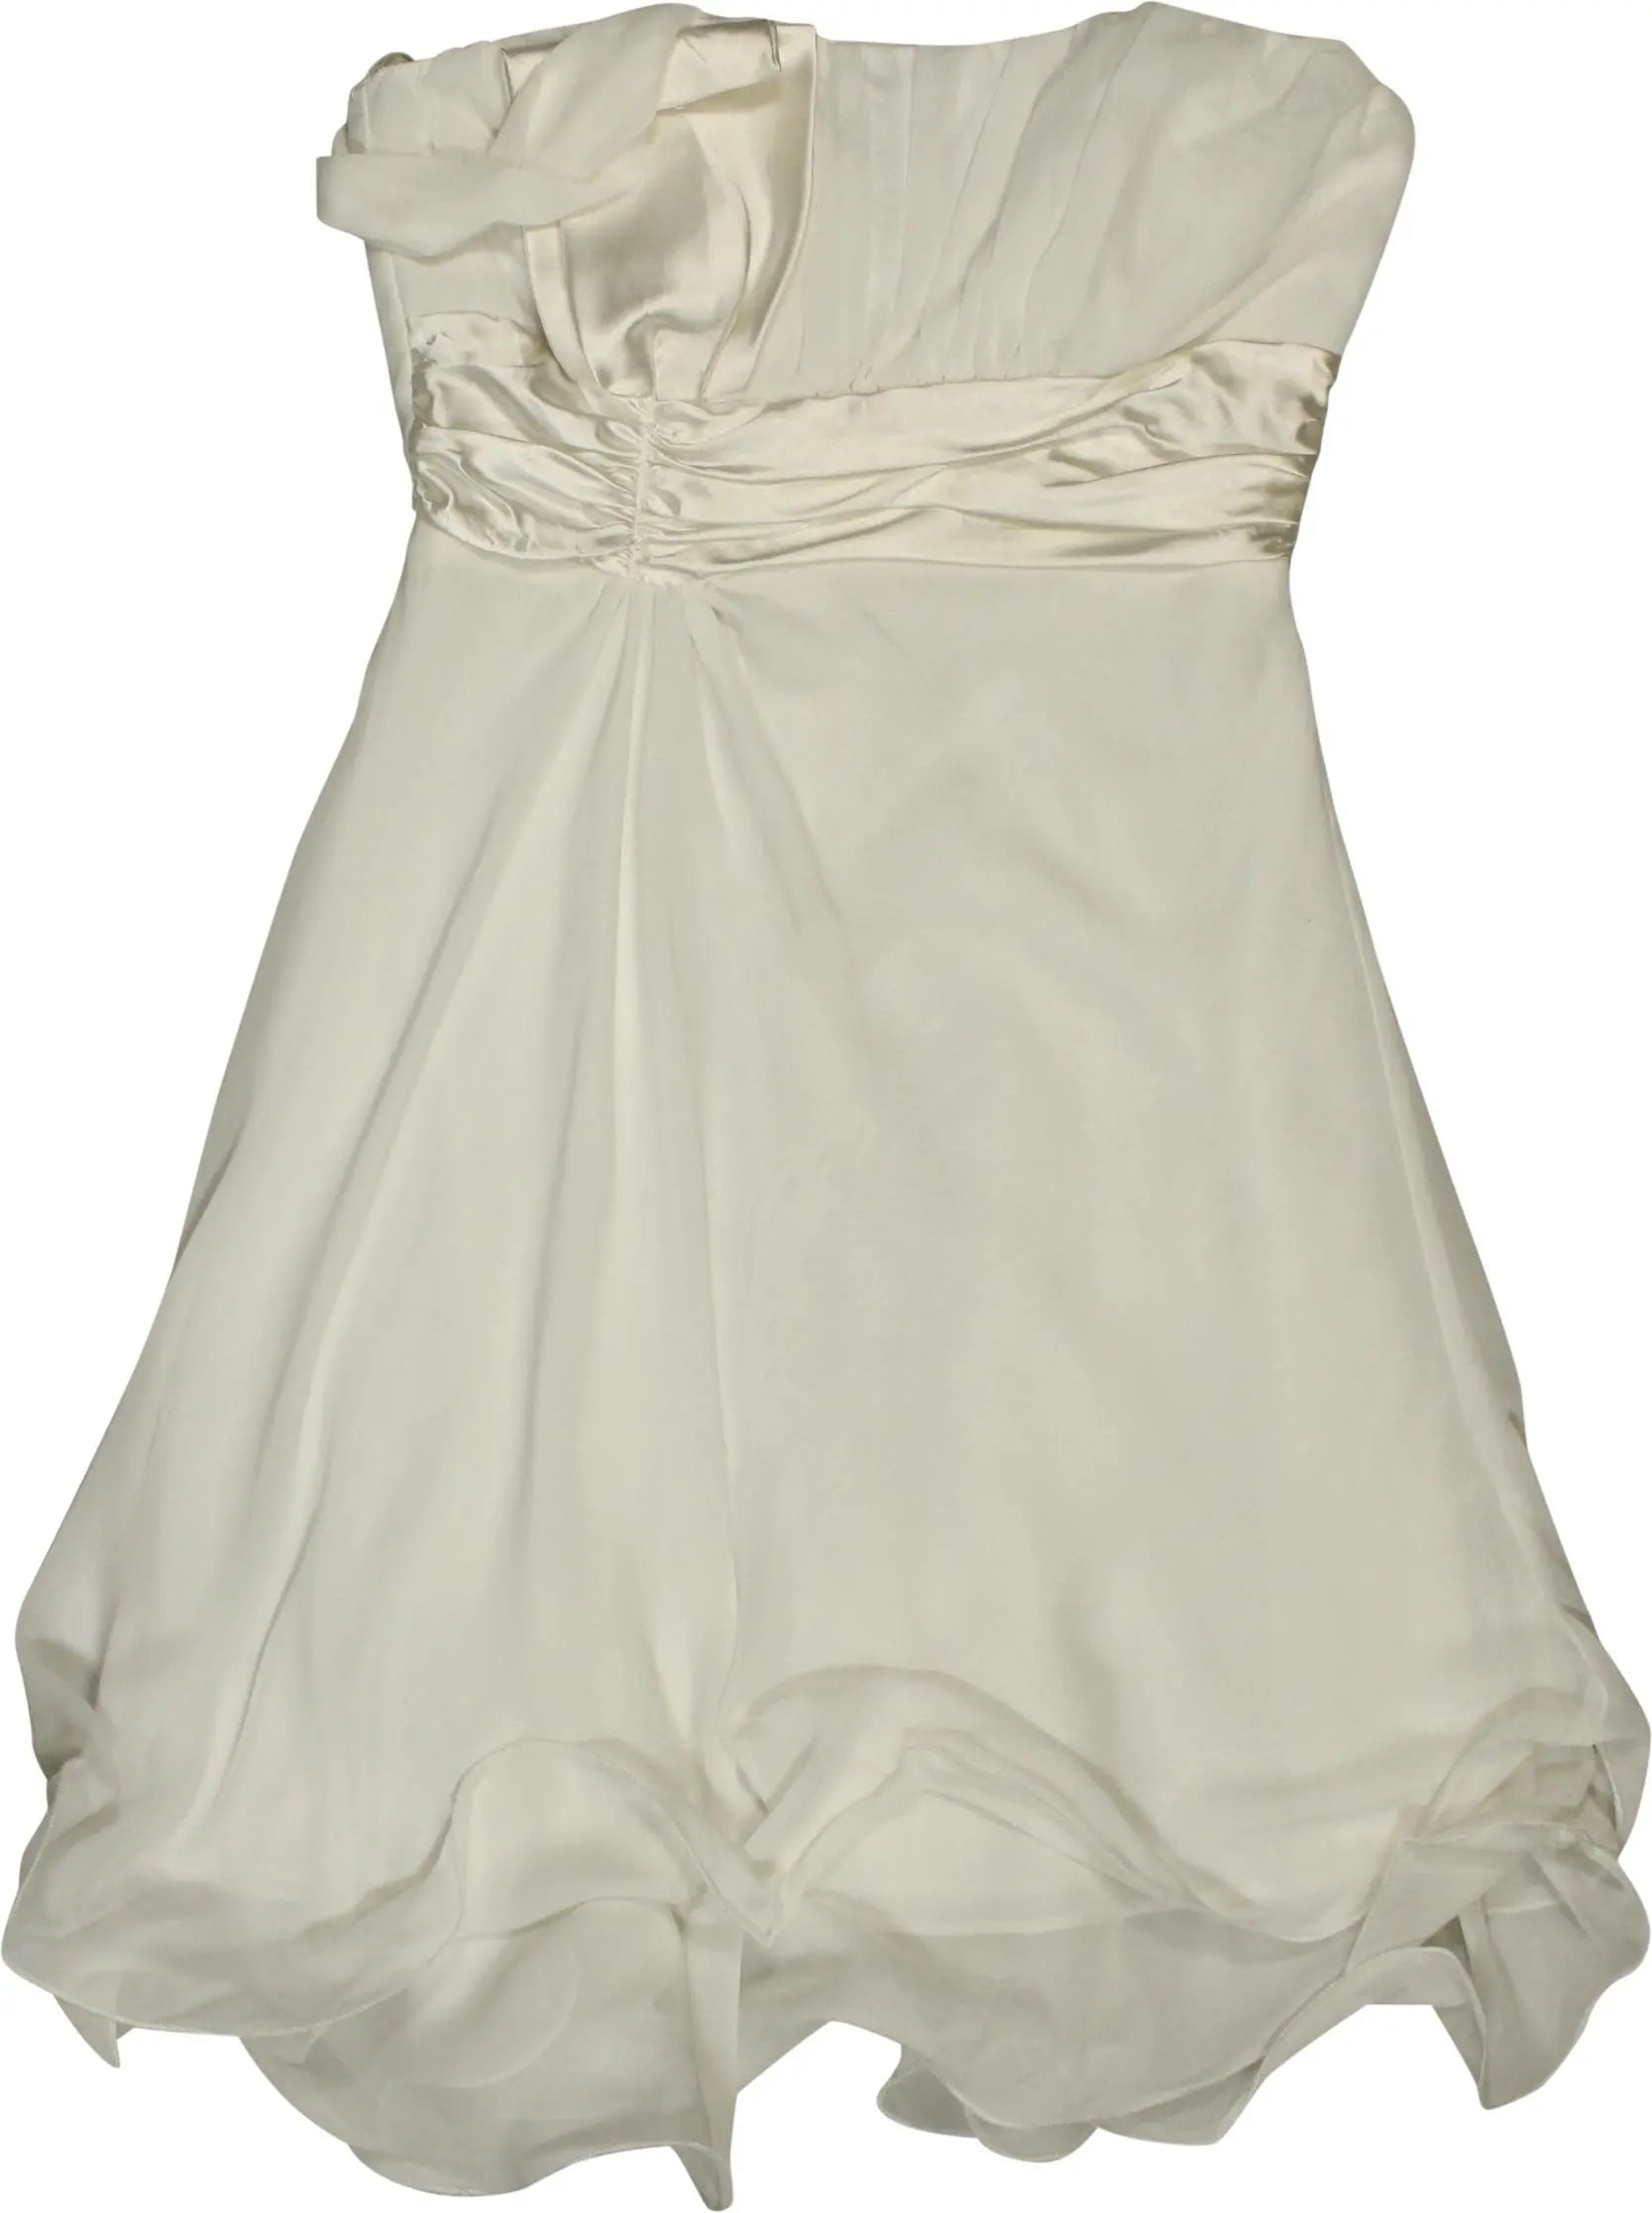 Ceci Fashion - Asymmetrical Chiffon Gala Dress- ThriftTale.com - Vintage and second handclothing